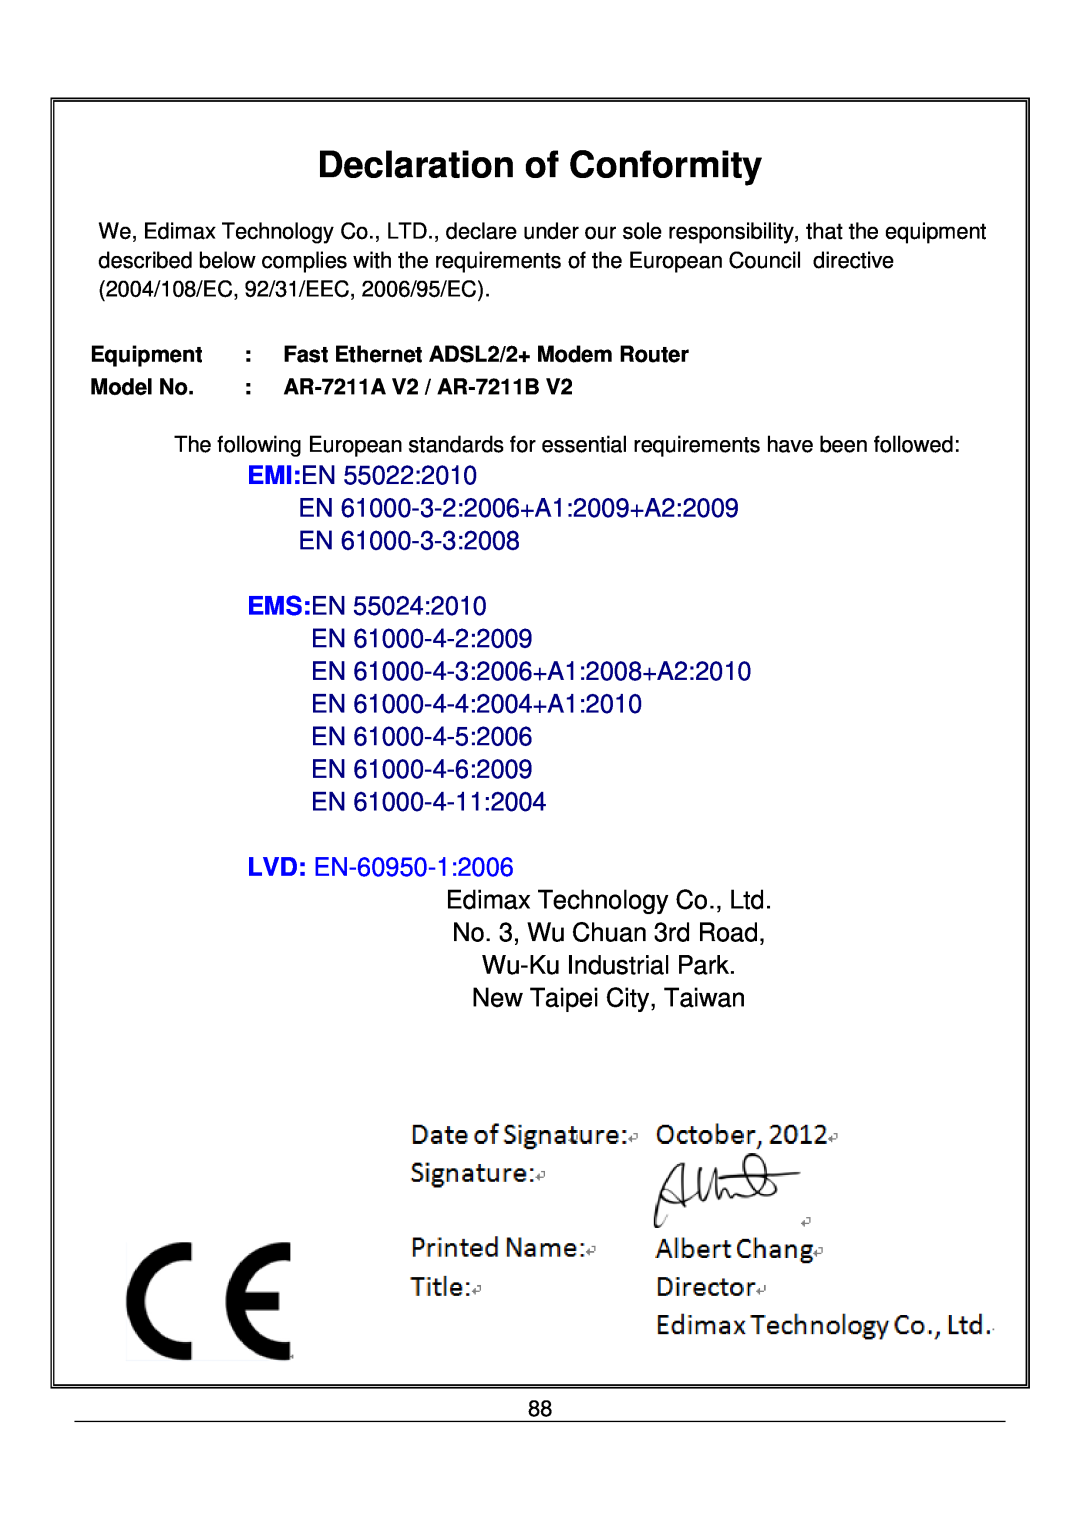 Edimax Technology AR-7211B V2 manual Declaration of Conformity, EMIEN EN 61000-3-22006+A12009+A22009 EN EMSEN EN, Equipment 